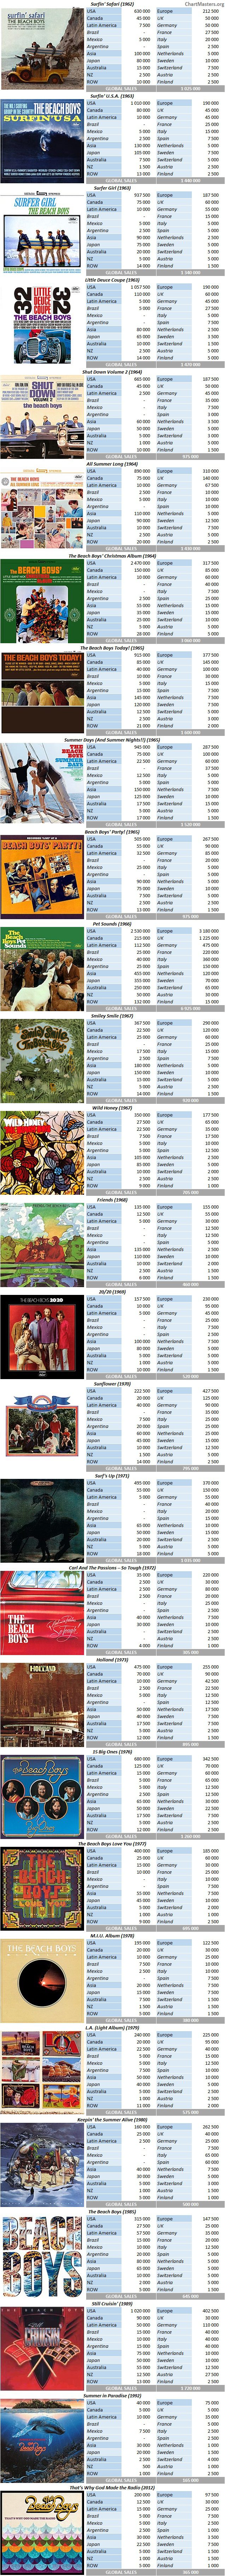 CSPC The Beach Boys album sales breakdowns